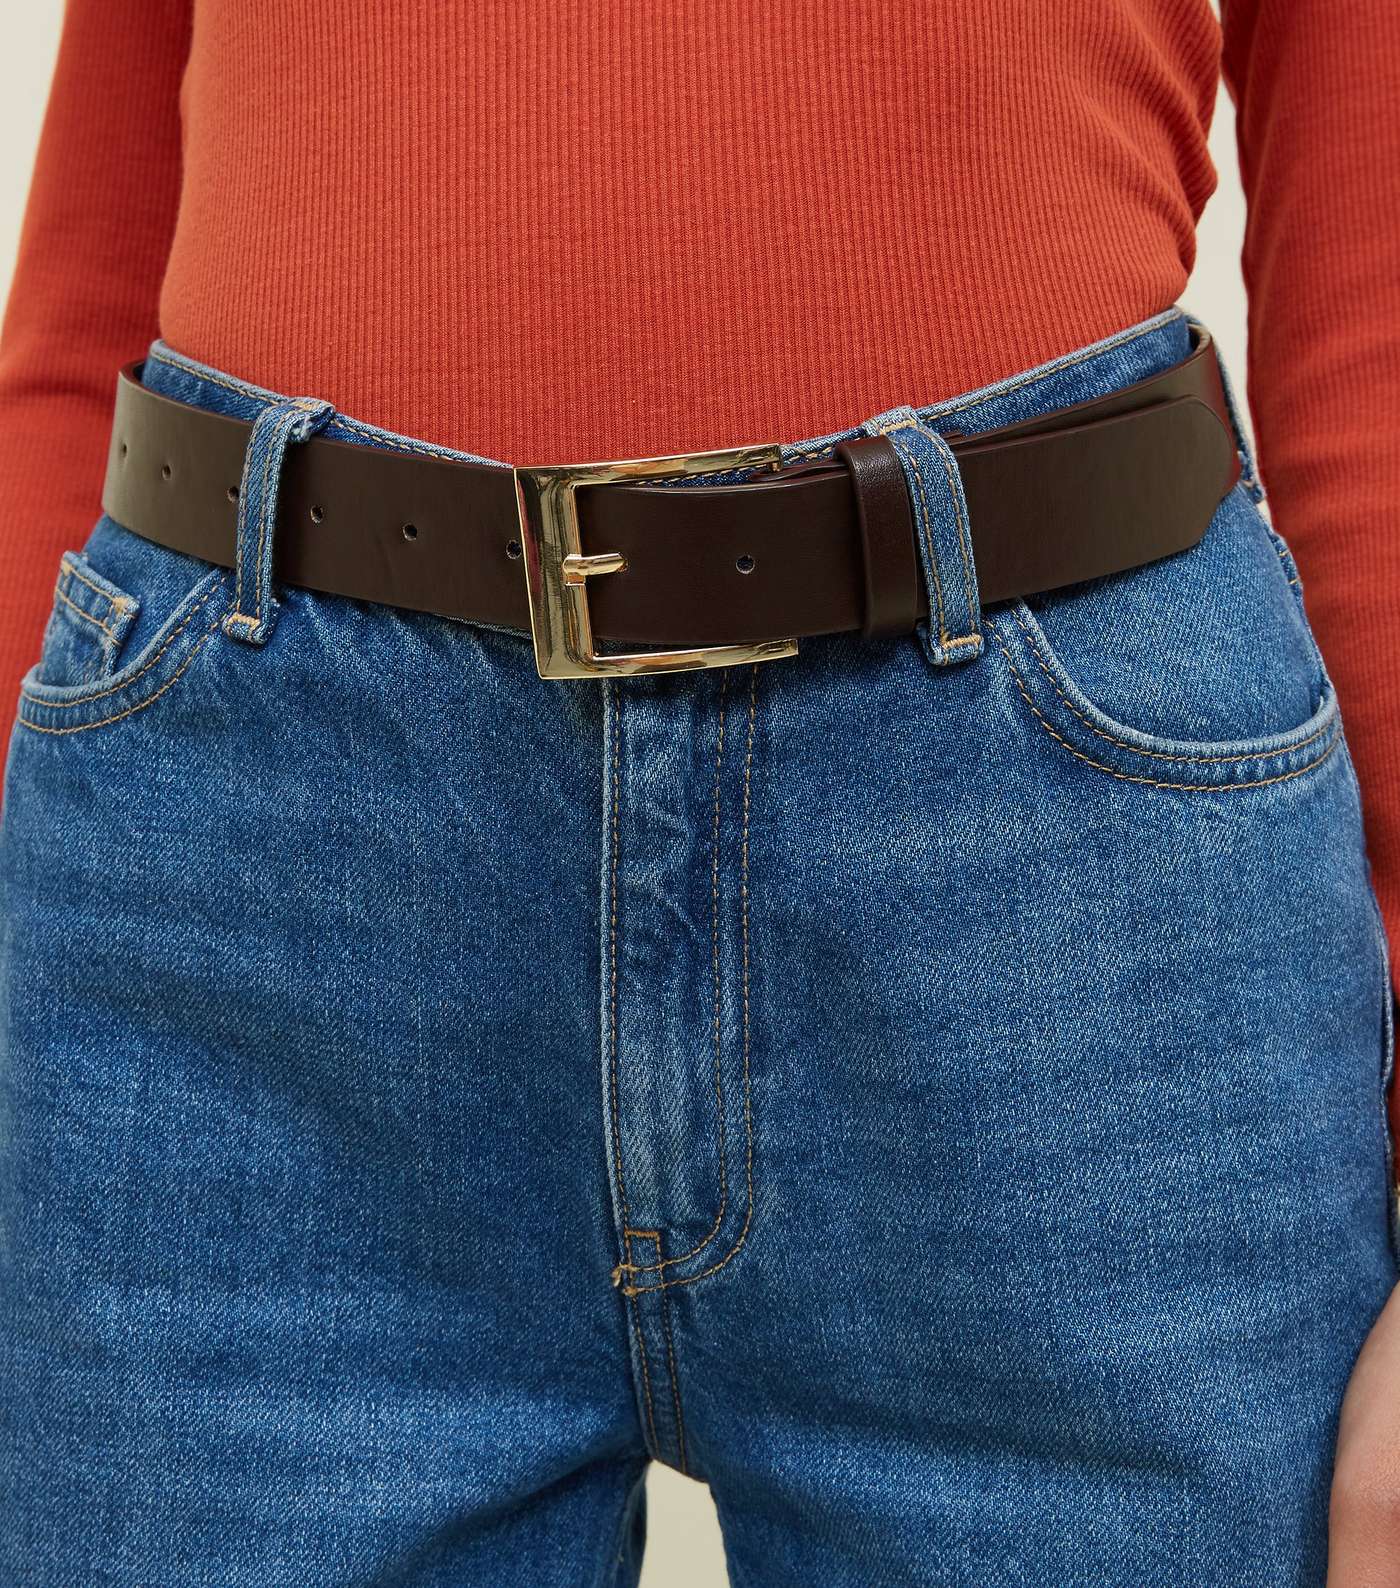 Dark Brown Leather-Look Jeans Belt